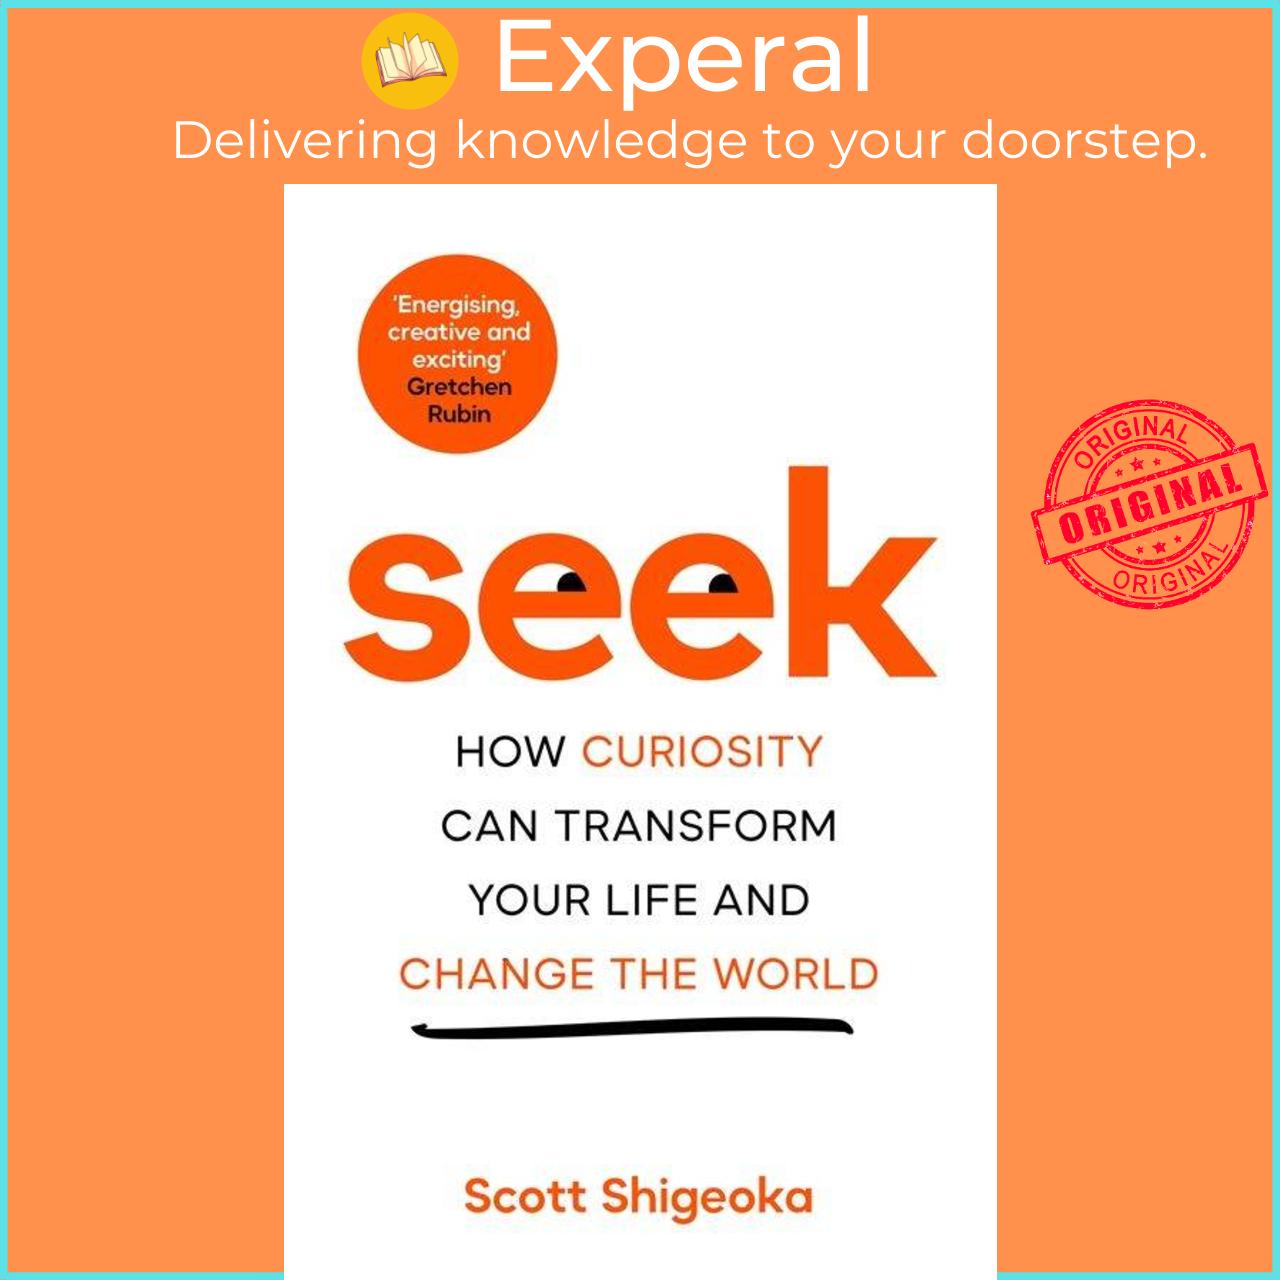 Hình ảnh Sách - Seek - How Curiosity Can Transform Your Life and Change the World by Scott Shigeoka (UK edition, hardcover)